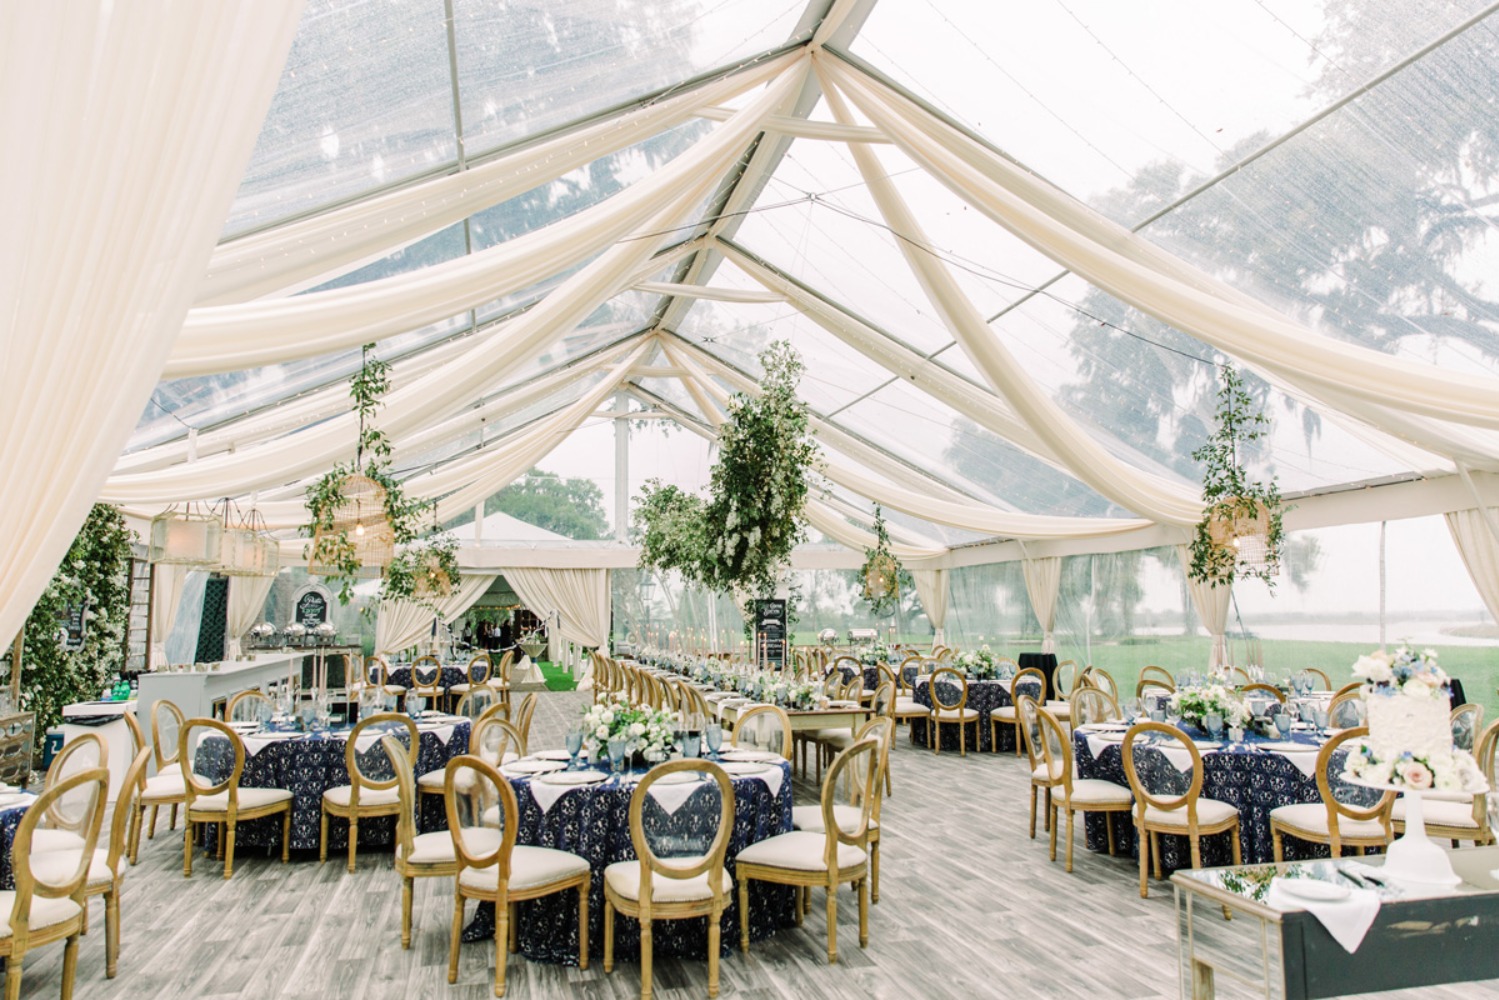 Stylish tent wedding reception